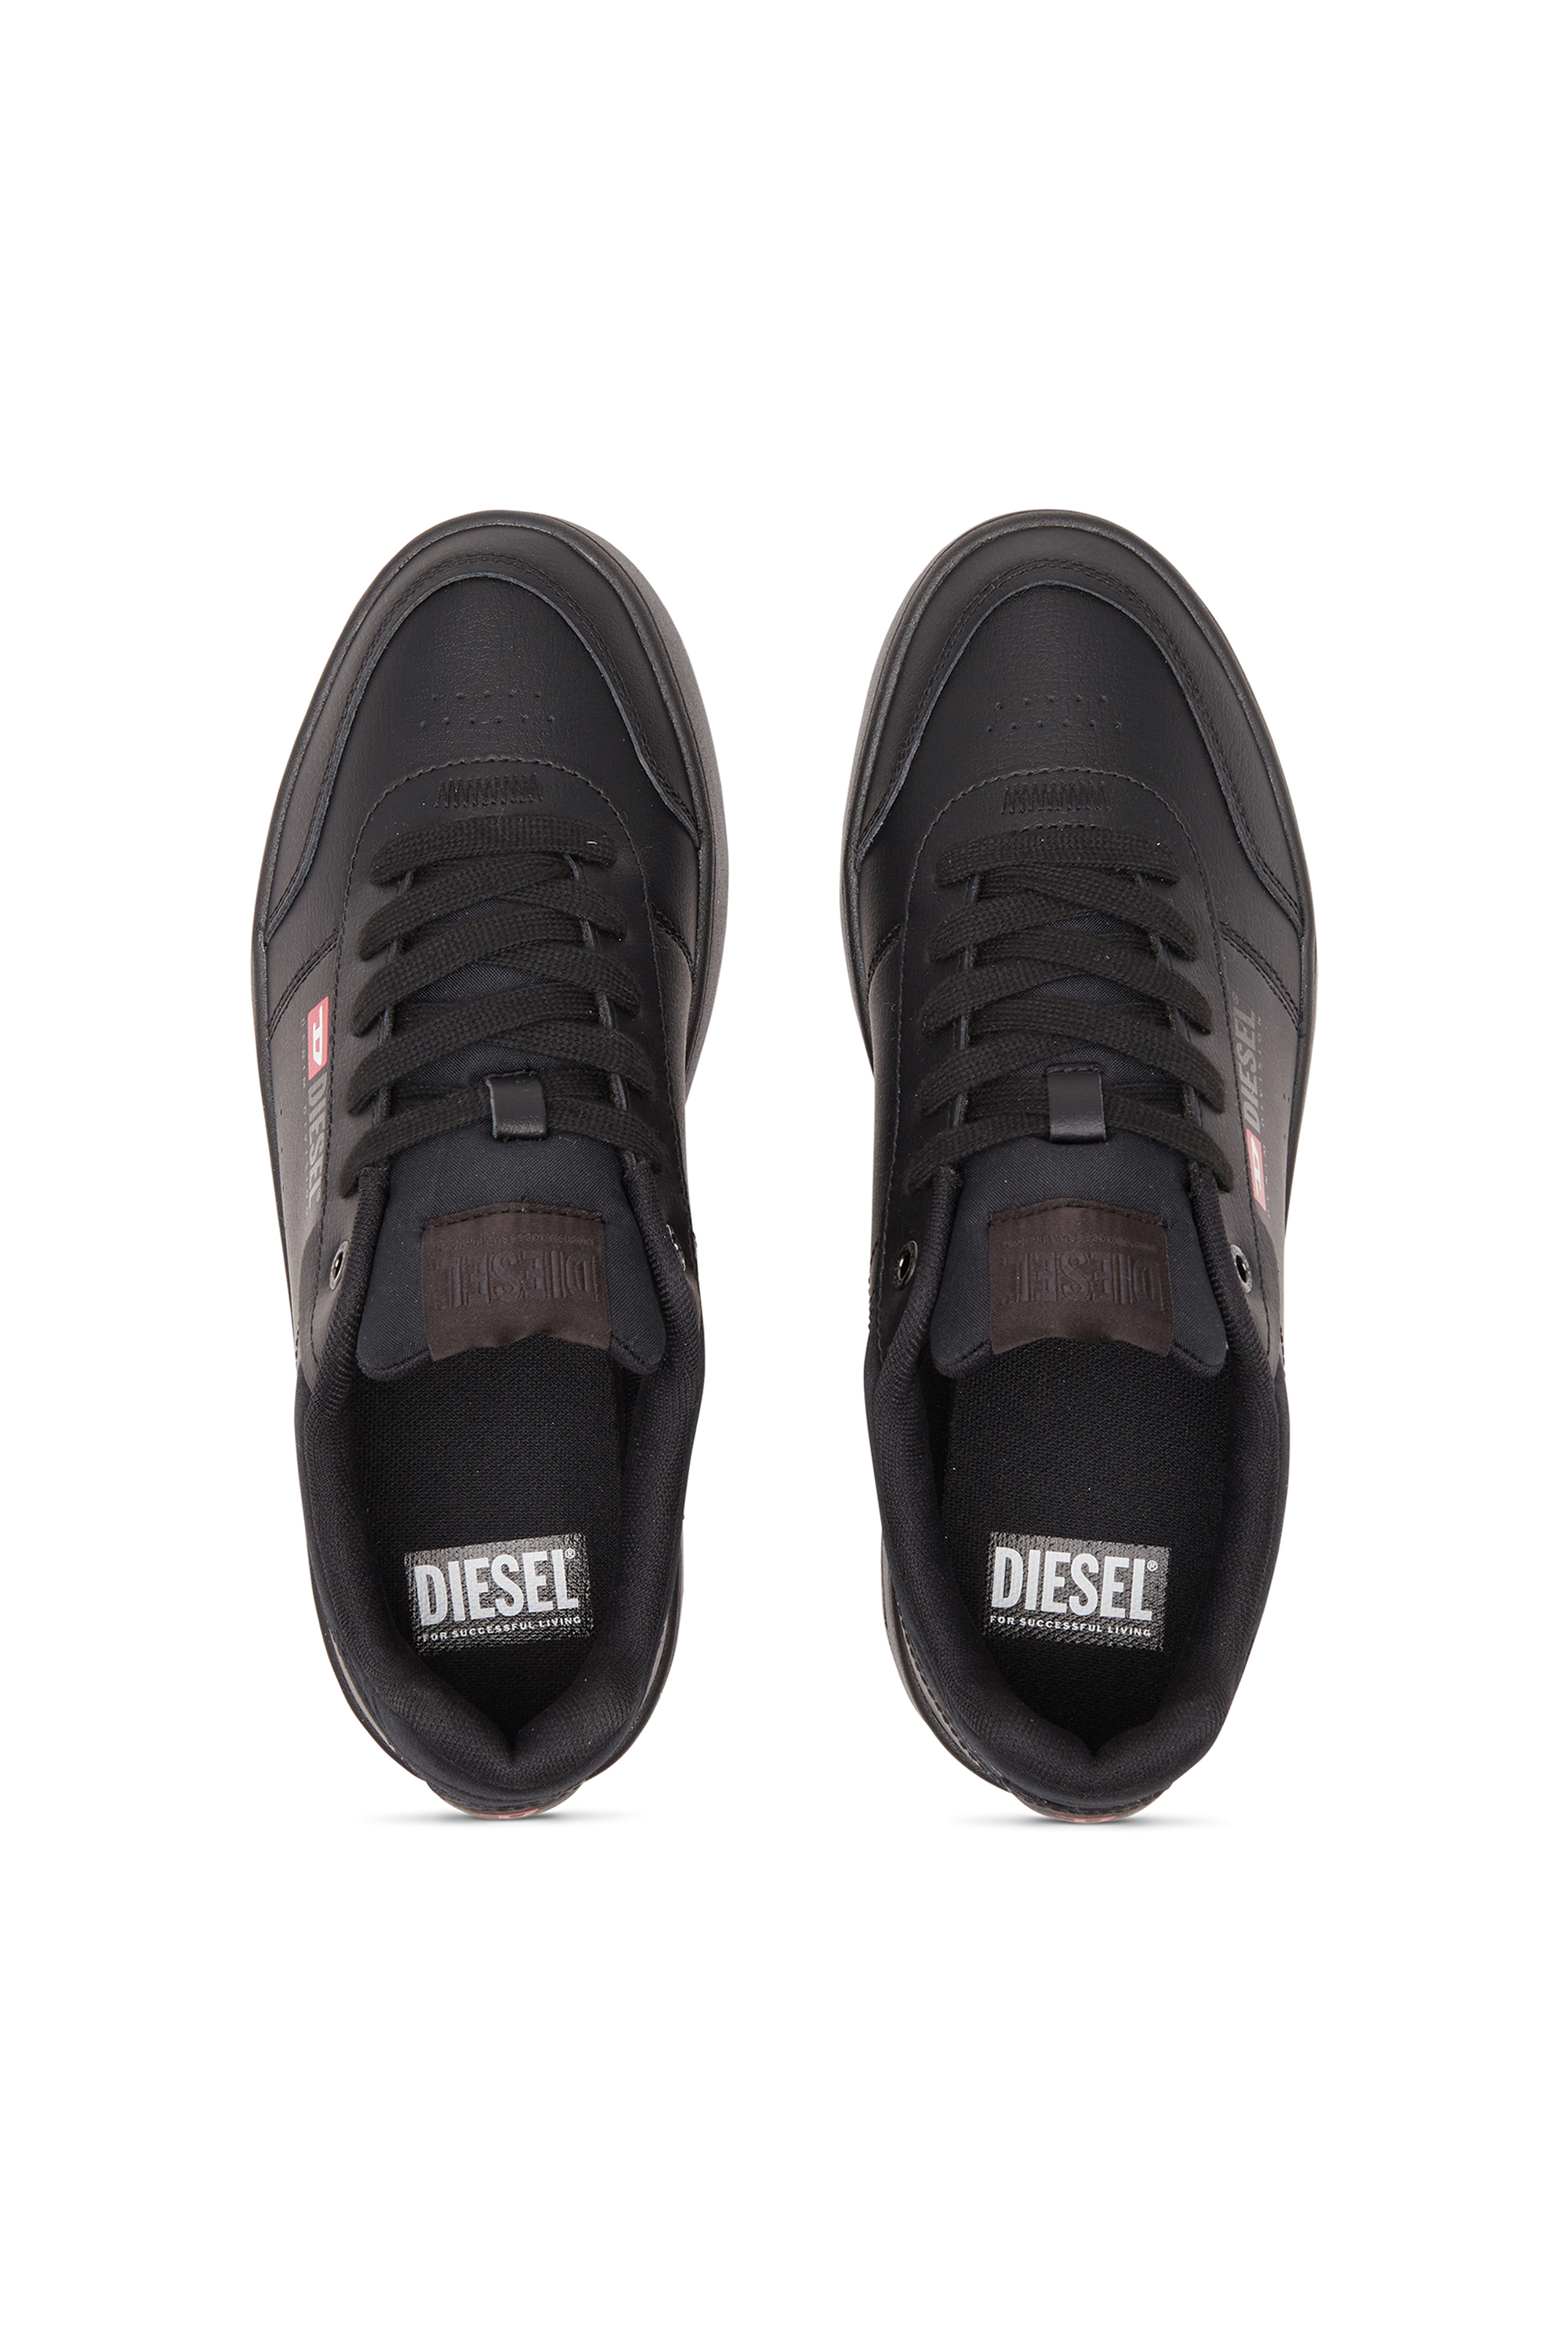 Diesel - S-ATHENE BOLD VTG W, Female S-Athene-Retro platform sneakers in leather in ブラック - Image 5